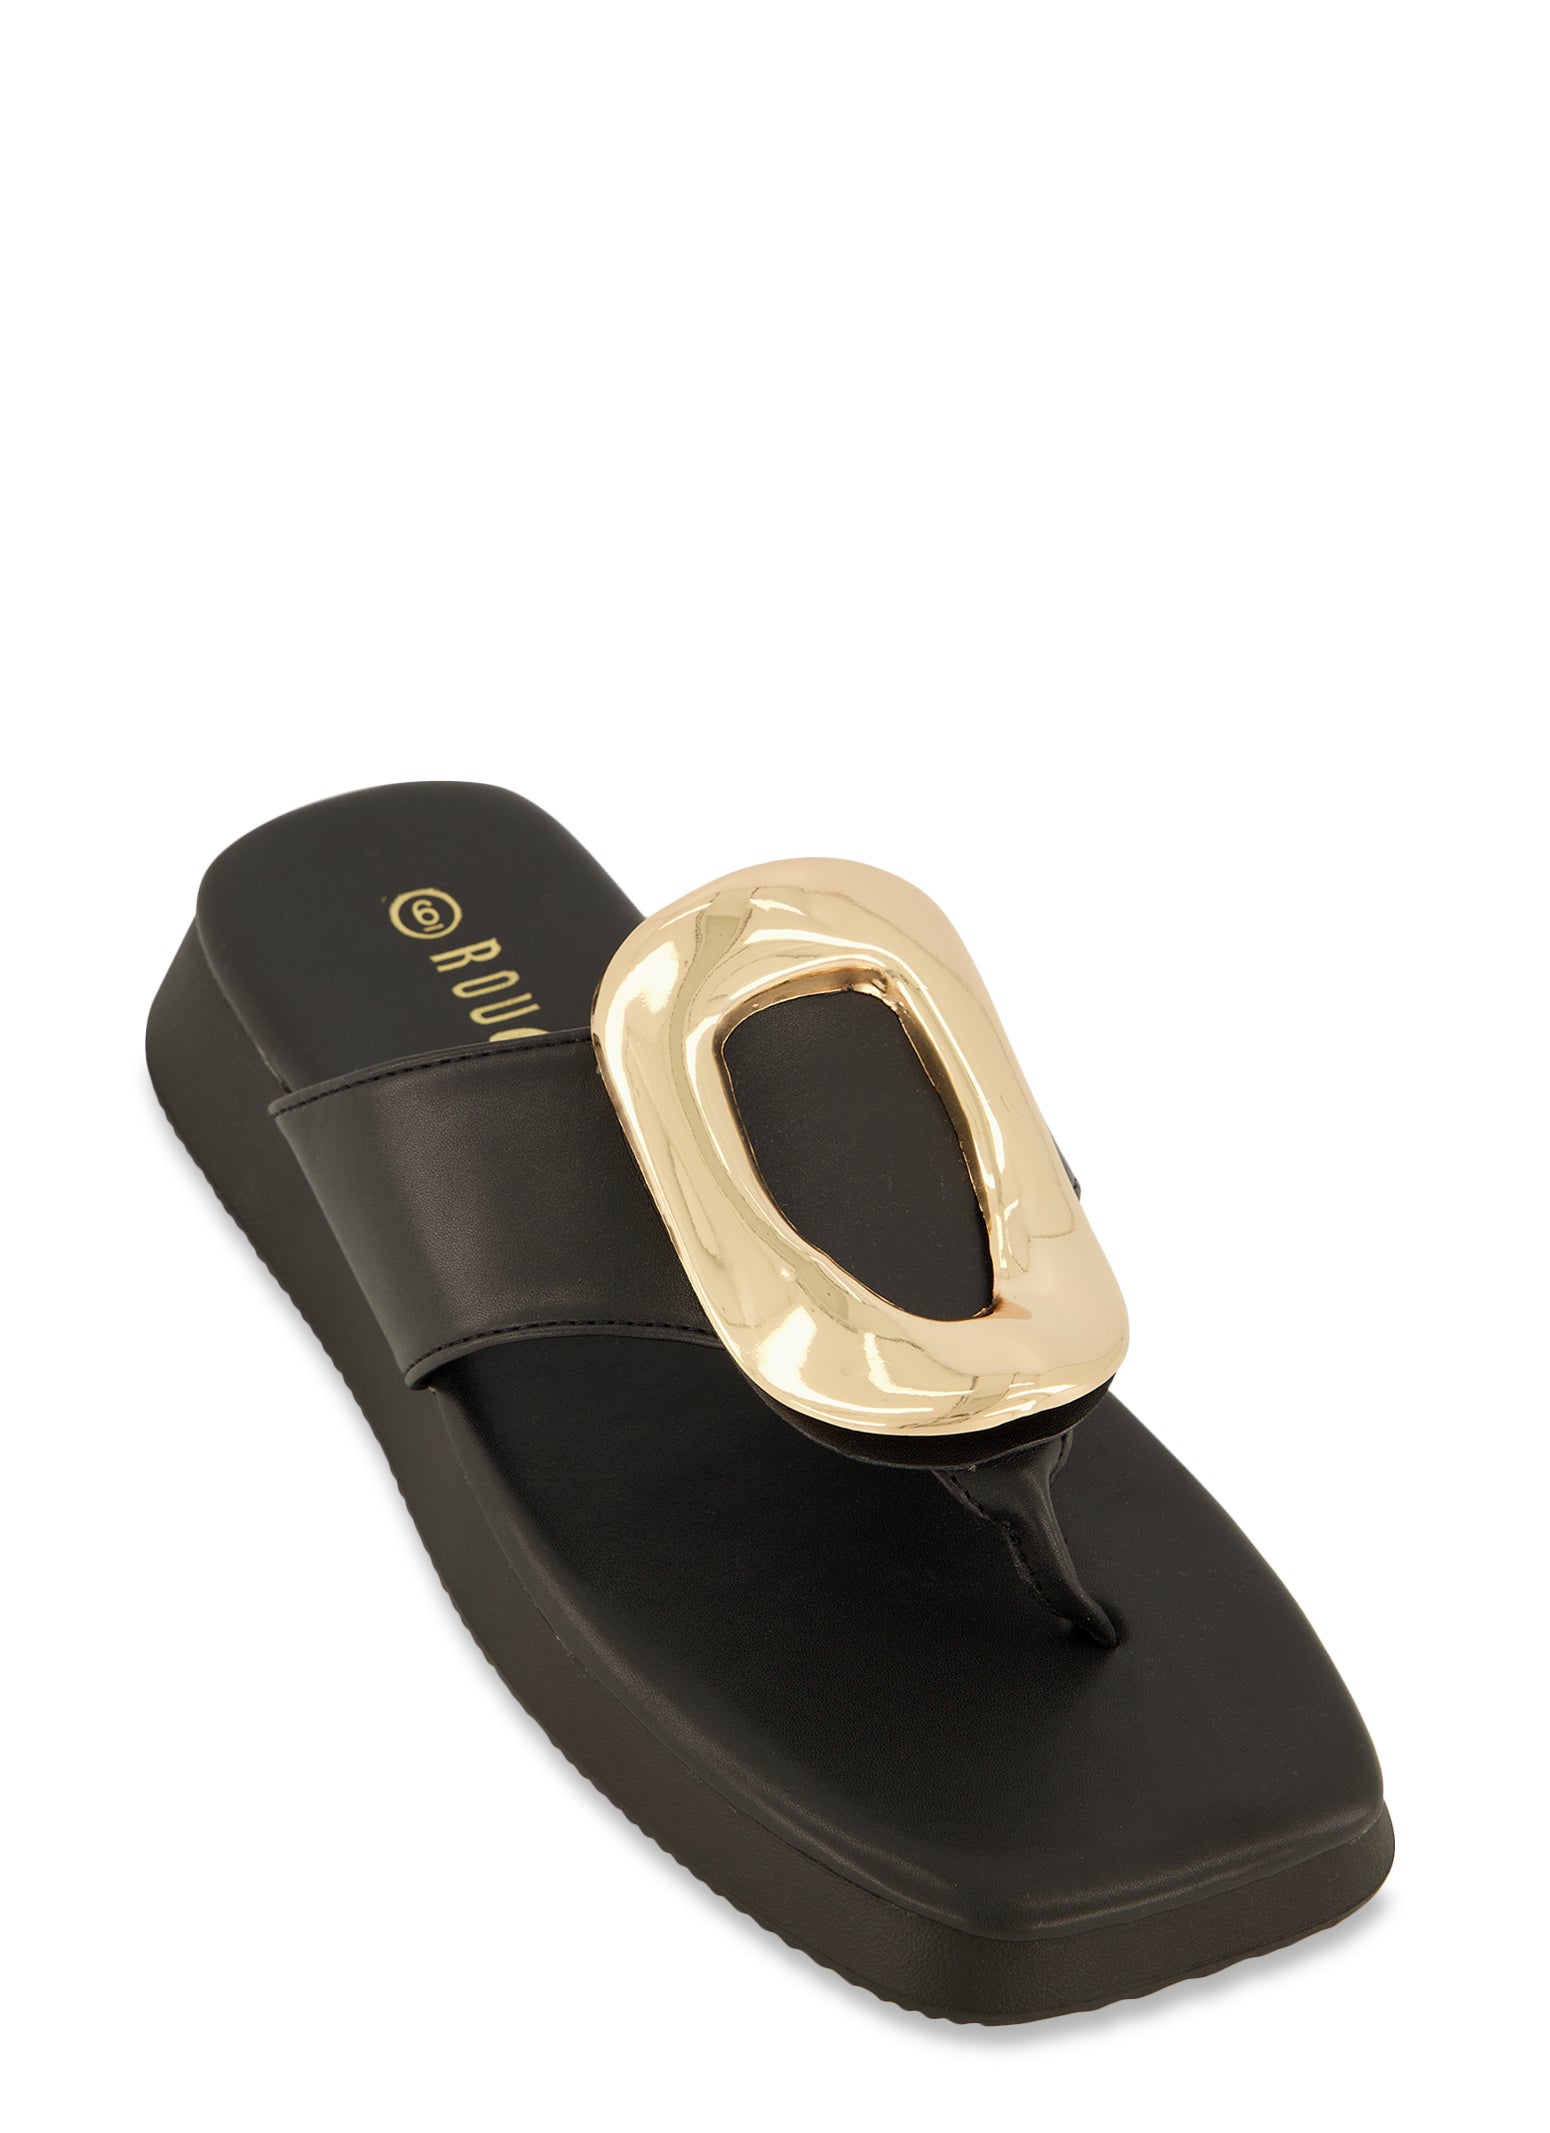 Drifter Platform Sandal - Black | Chunky sandals, Flatform sandals, Sandals  summer